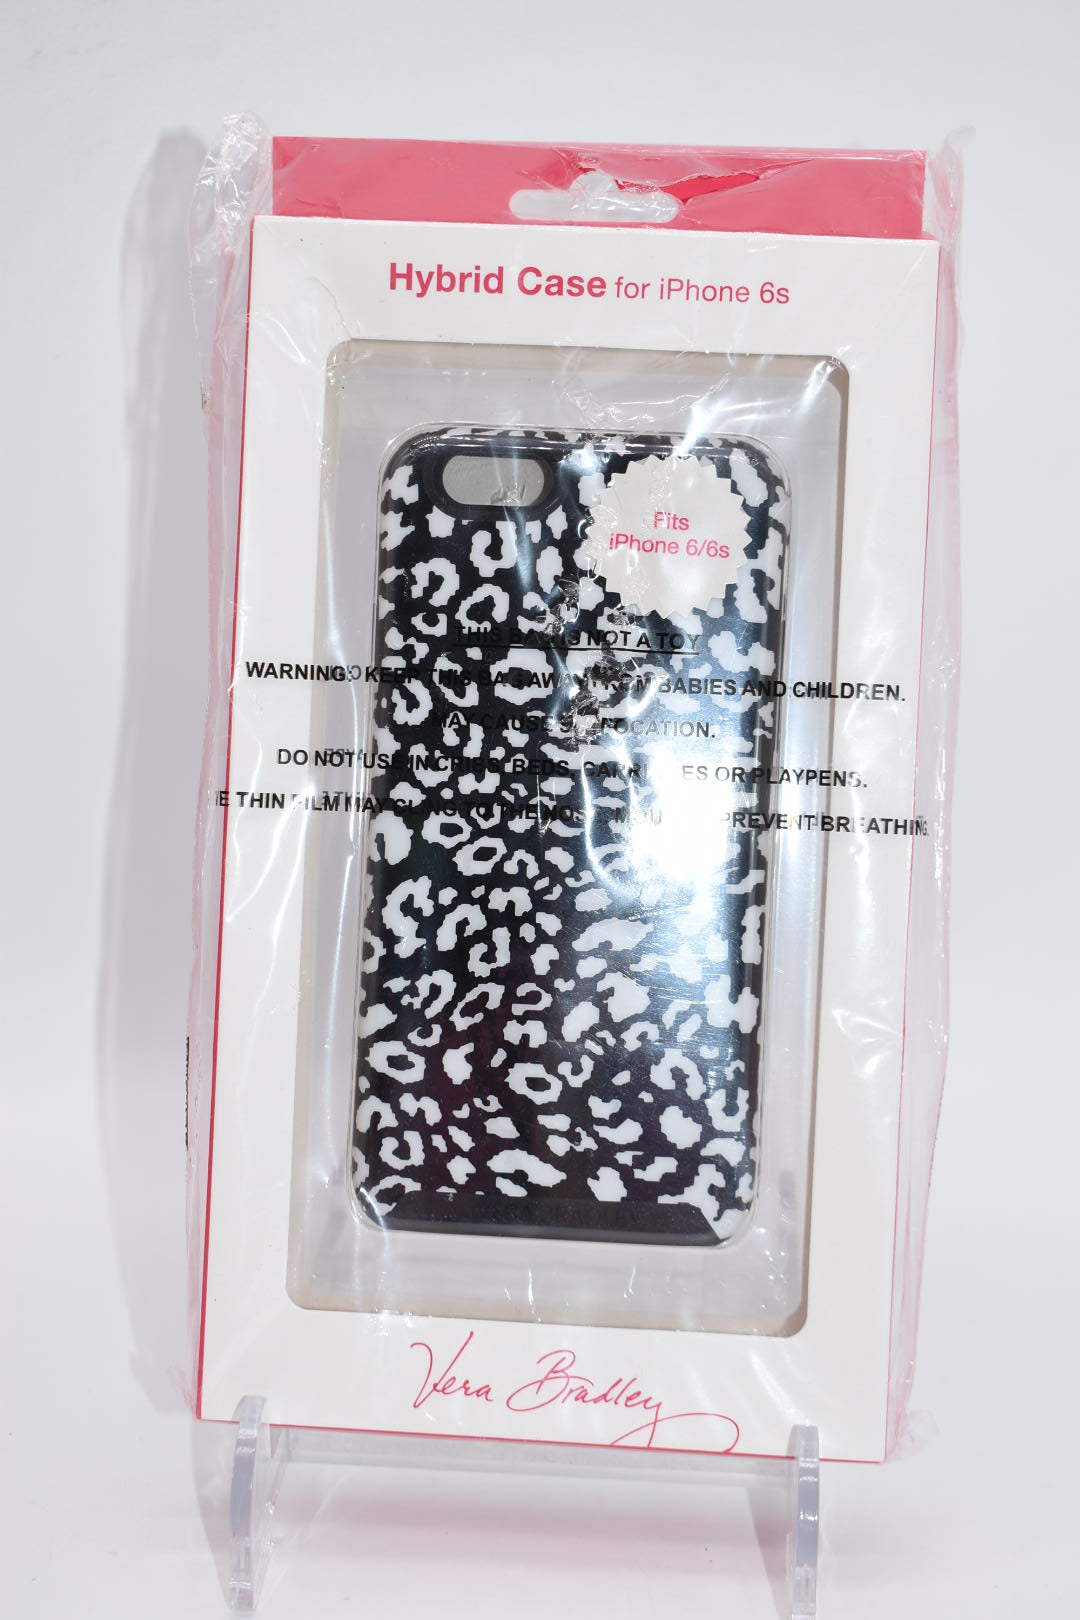 Vera Bradley Hybrid Phone Case for iPhone 6/6s in "Camocat" Pattern